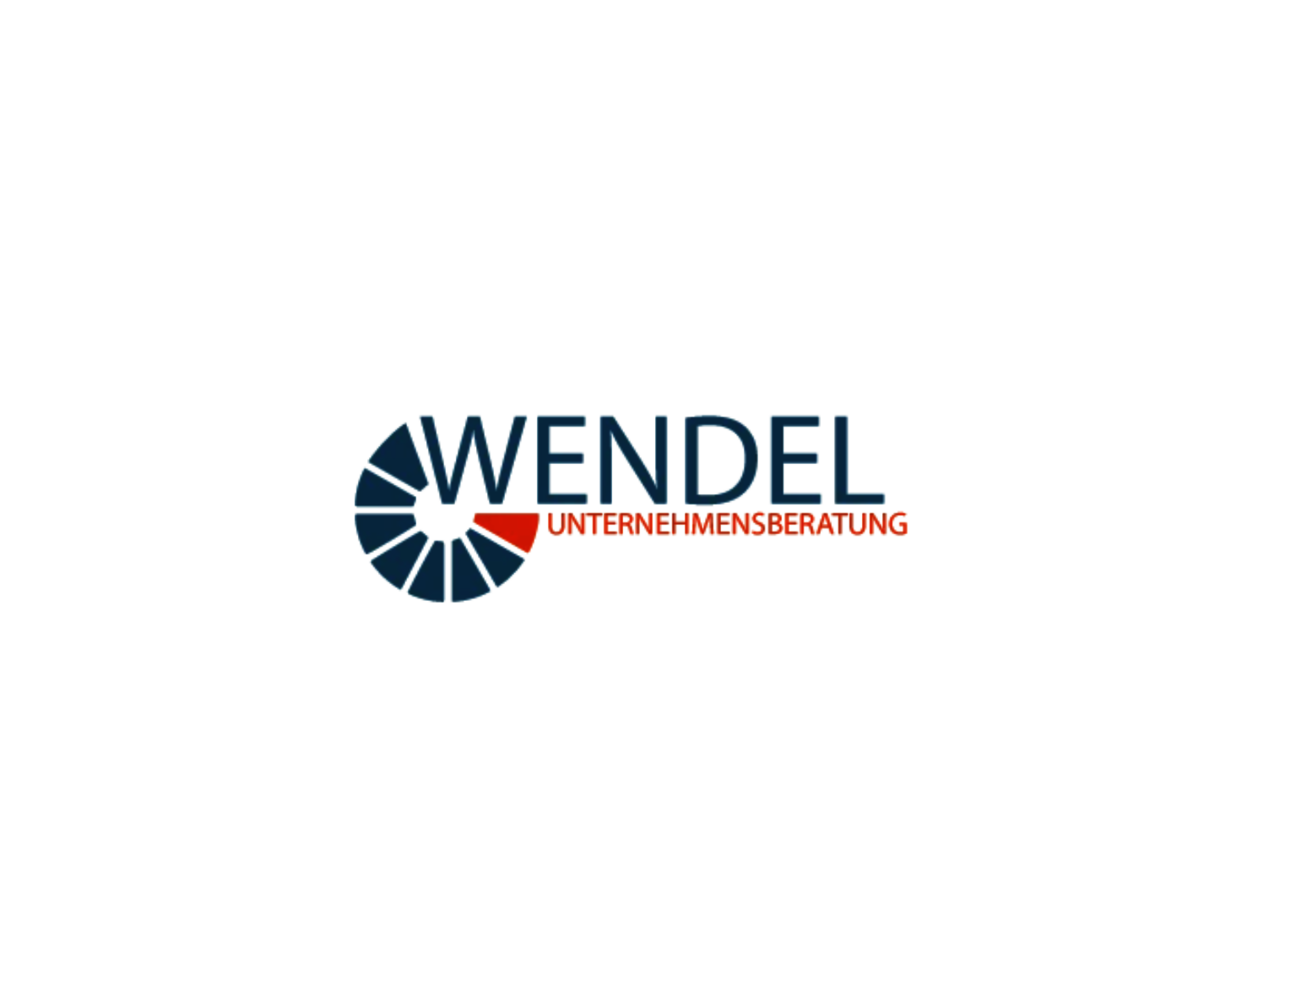 Wendel_Unternehmensberatung__Logo